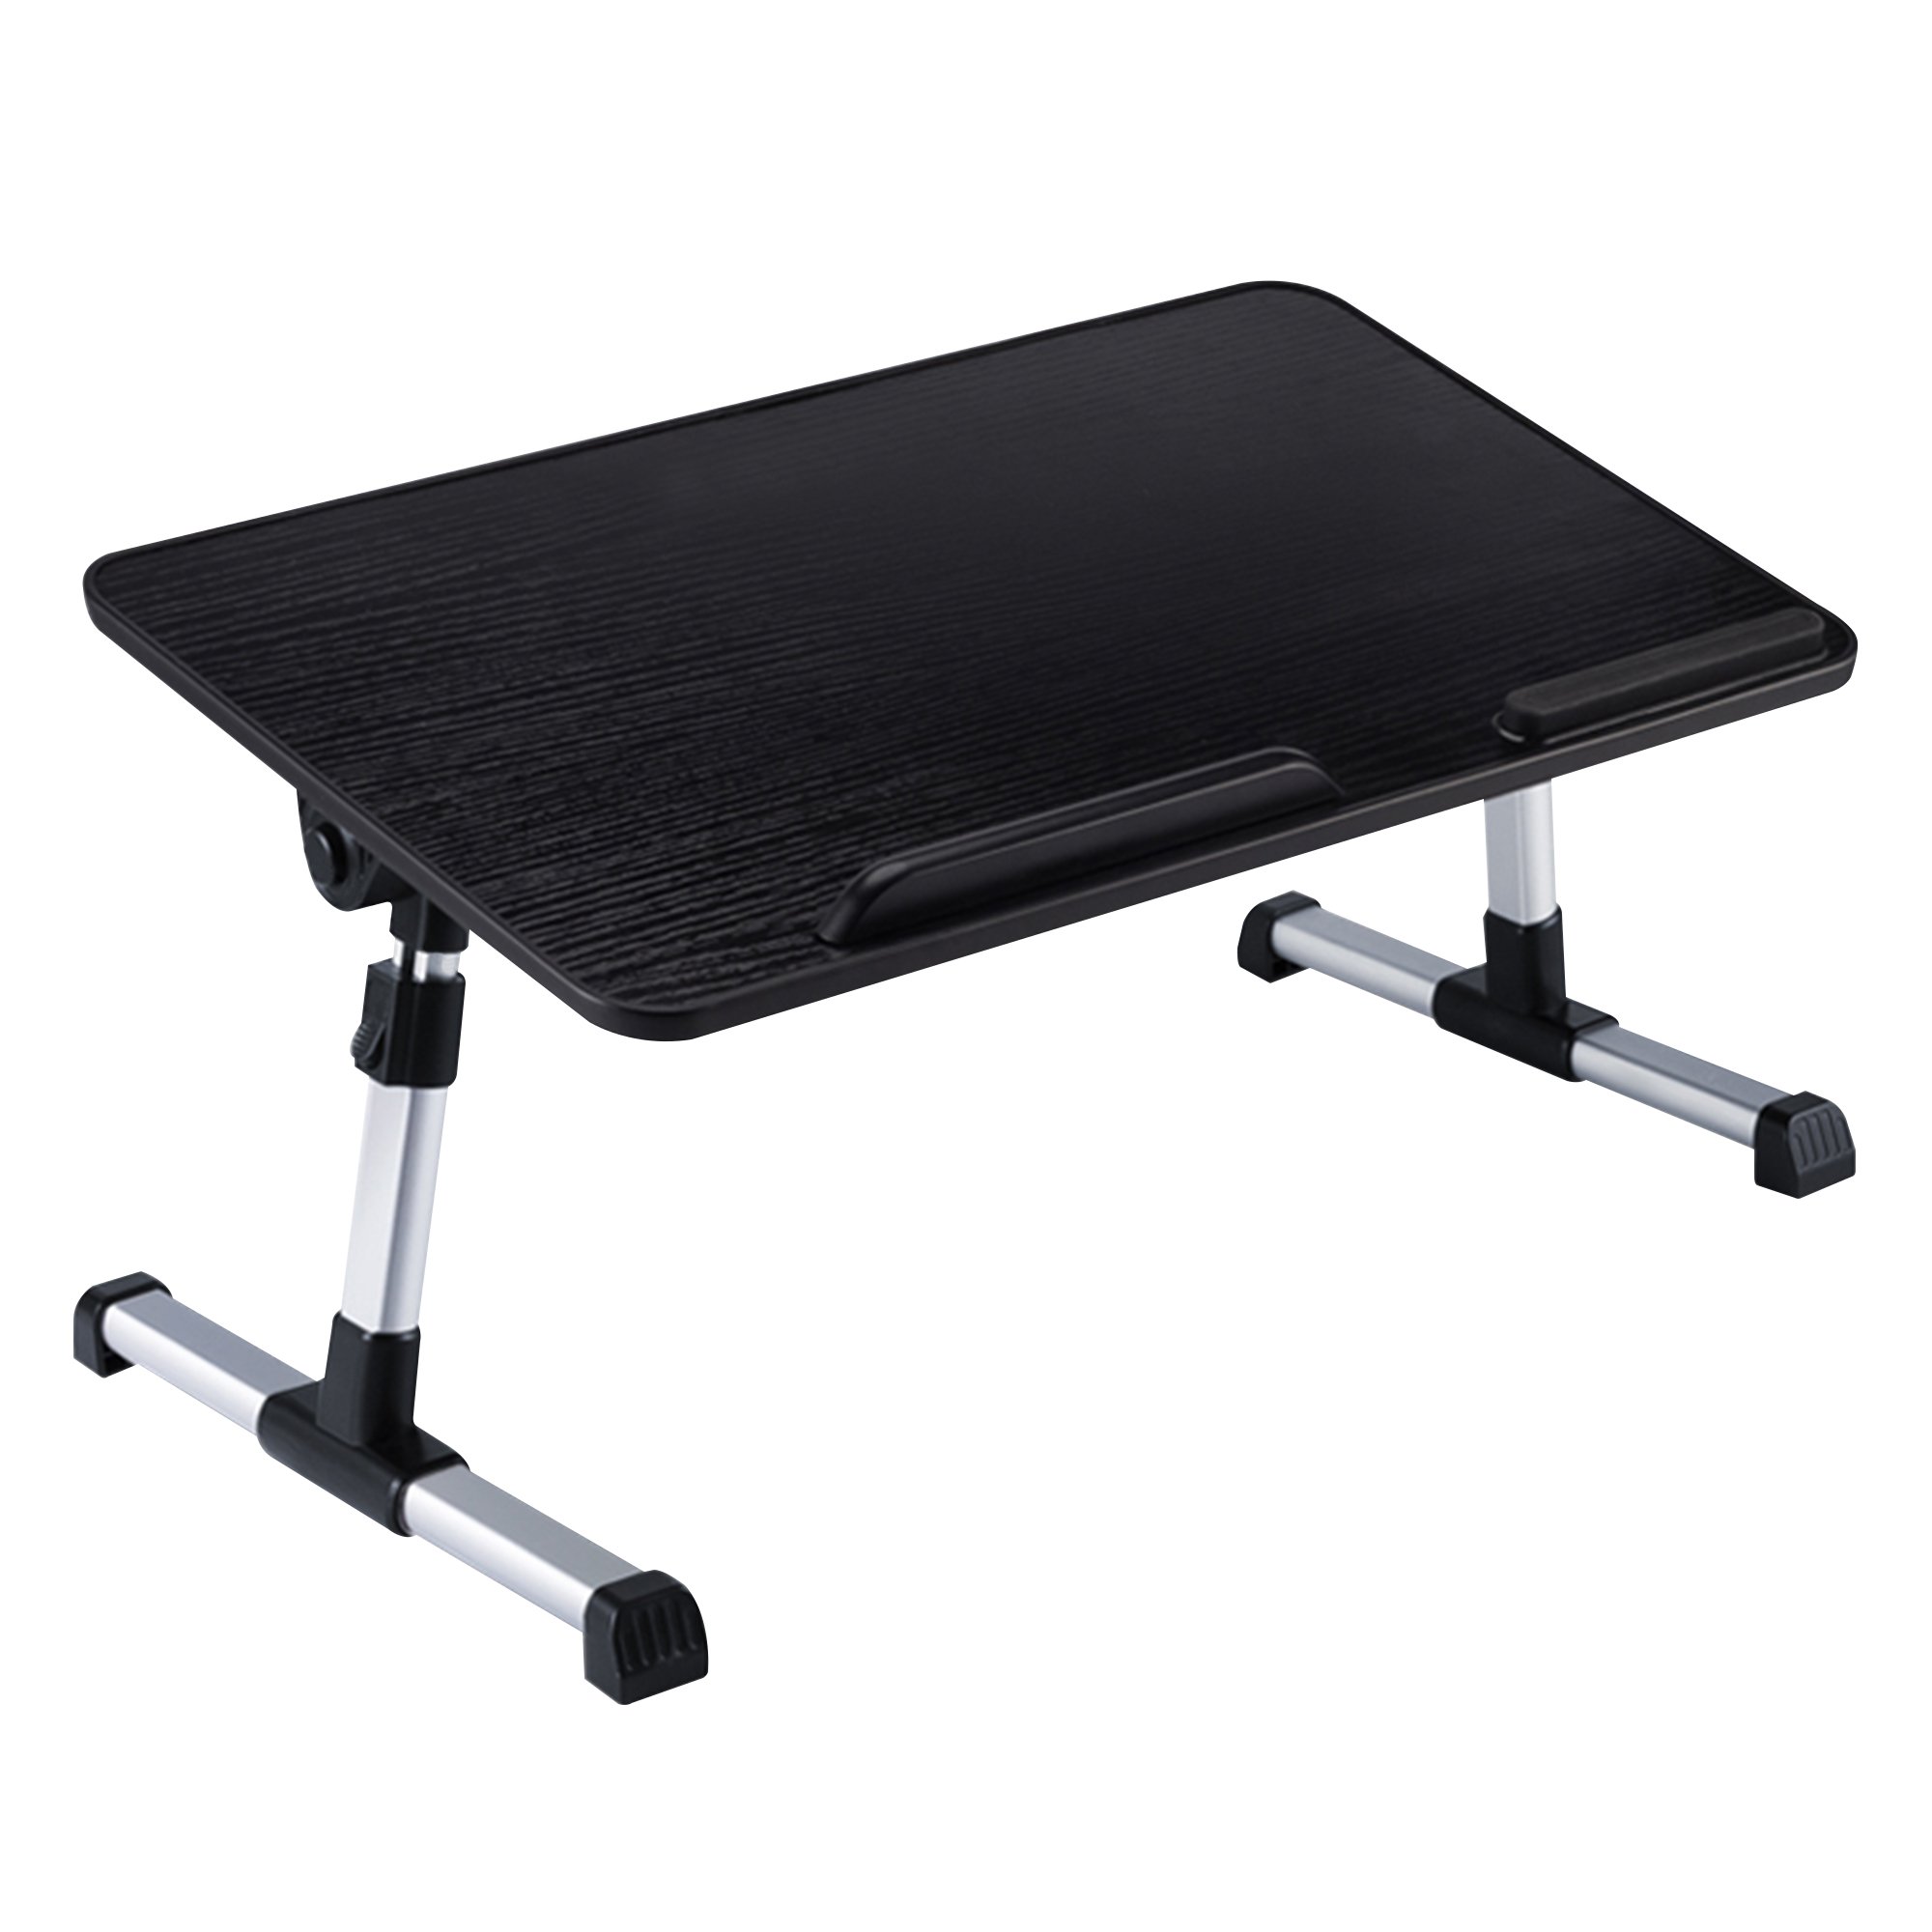 Foldable Laptop Desk Bed Table